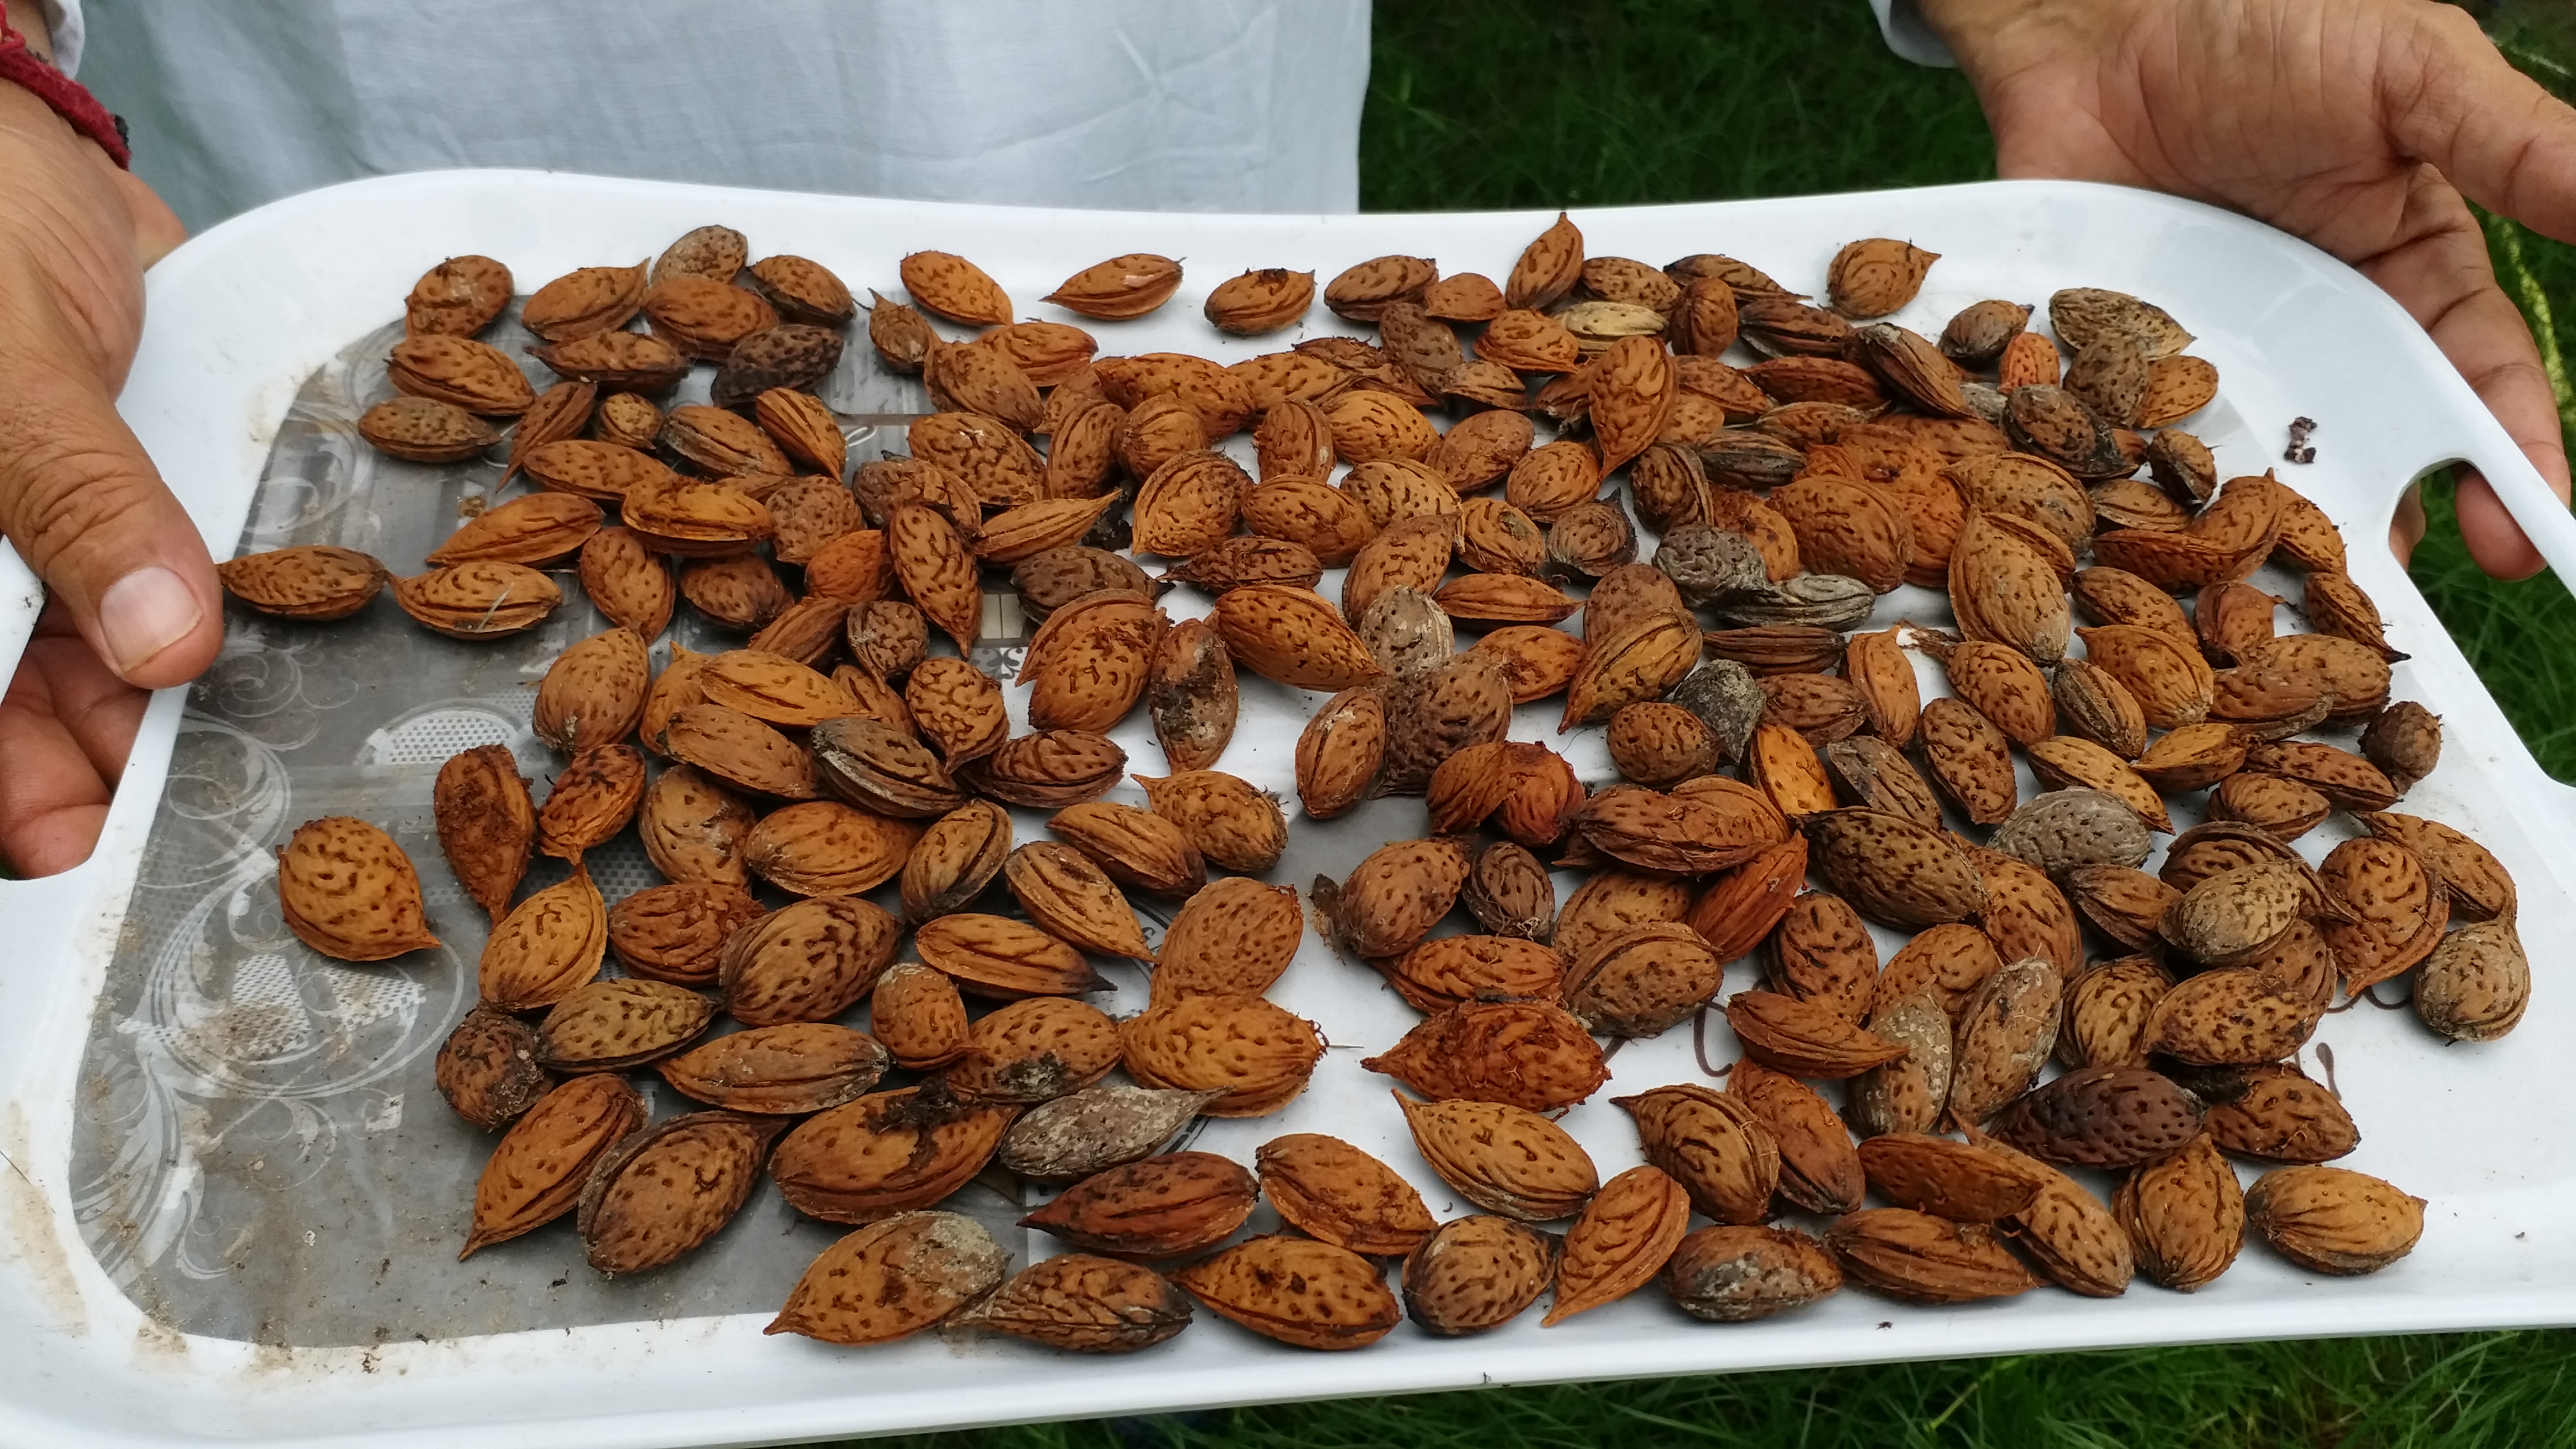 karnal farmer almond farming